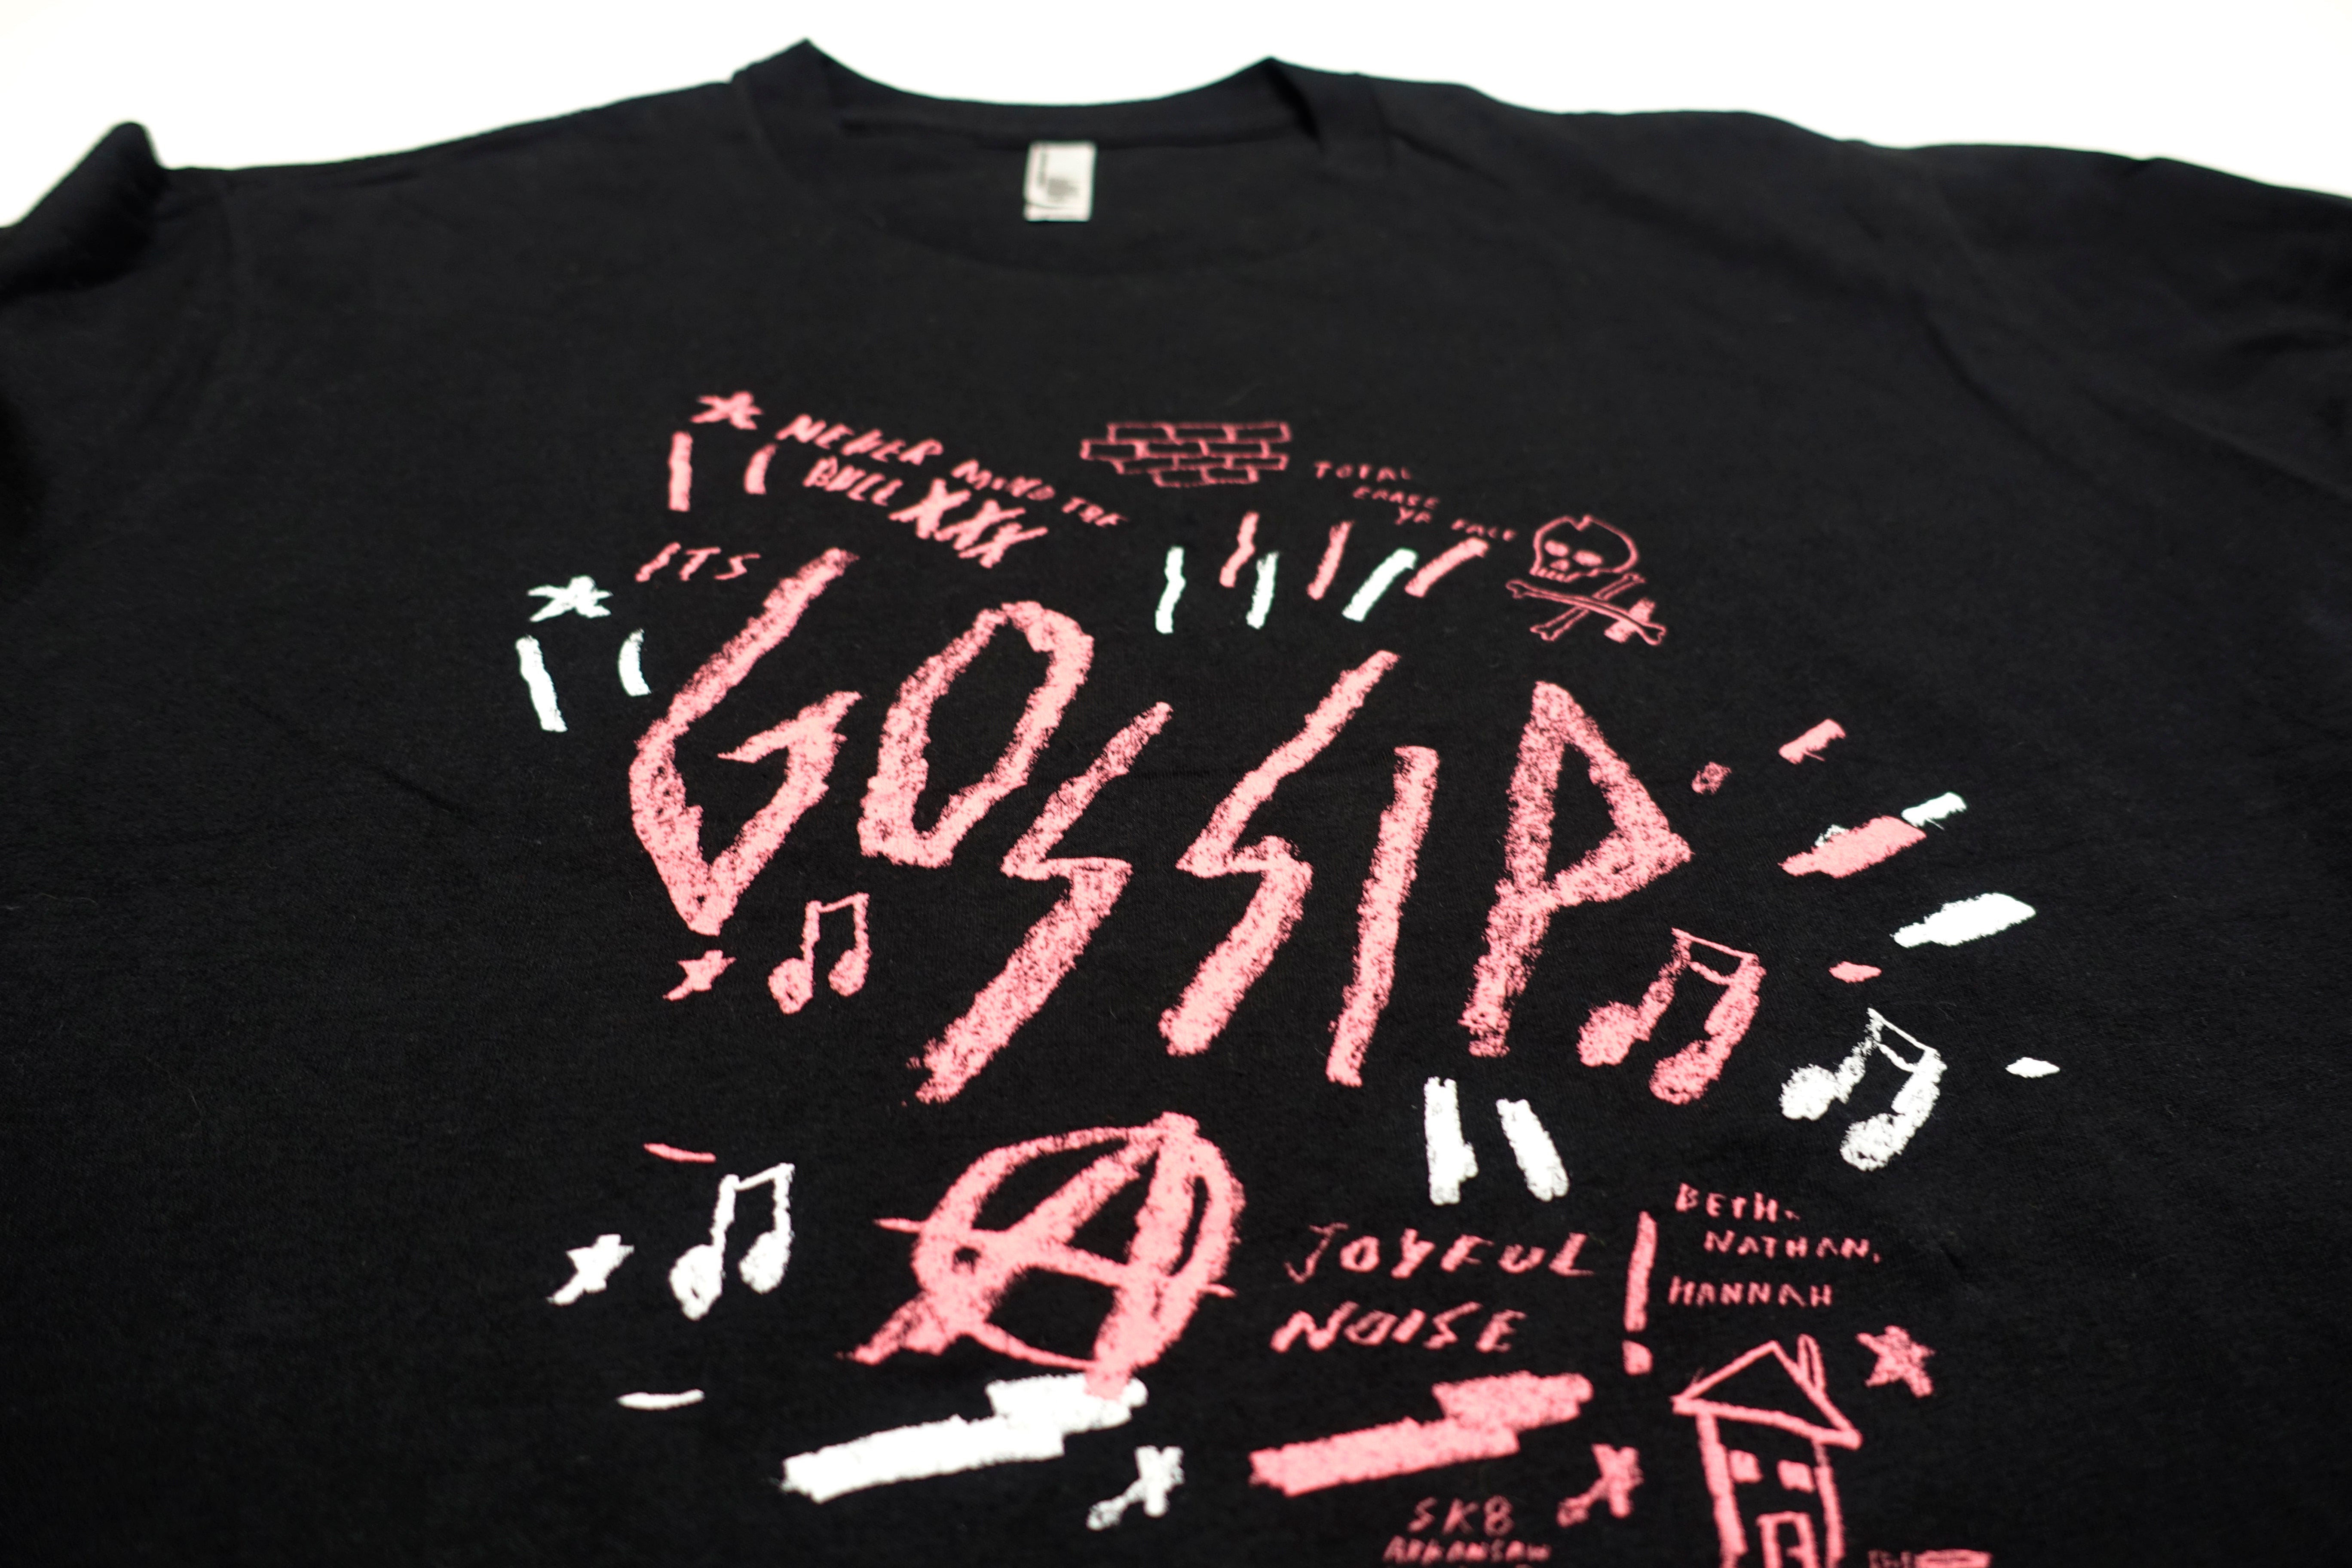 Gossip - Joyful Noise 2012 Tour Shirt Size Large